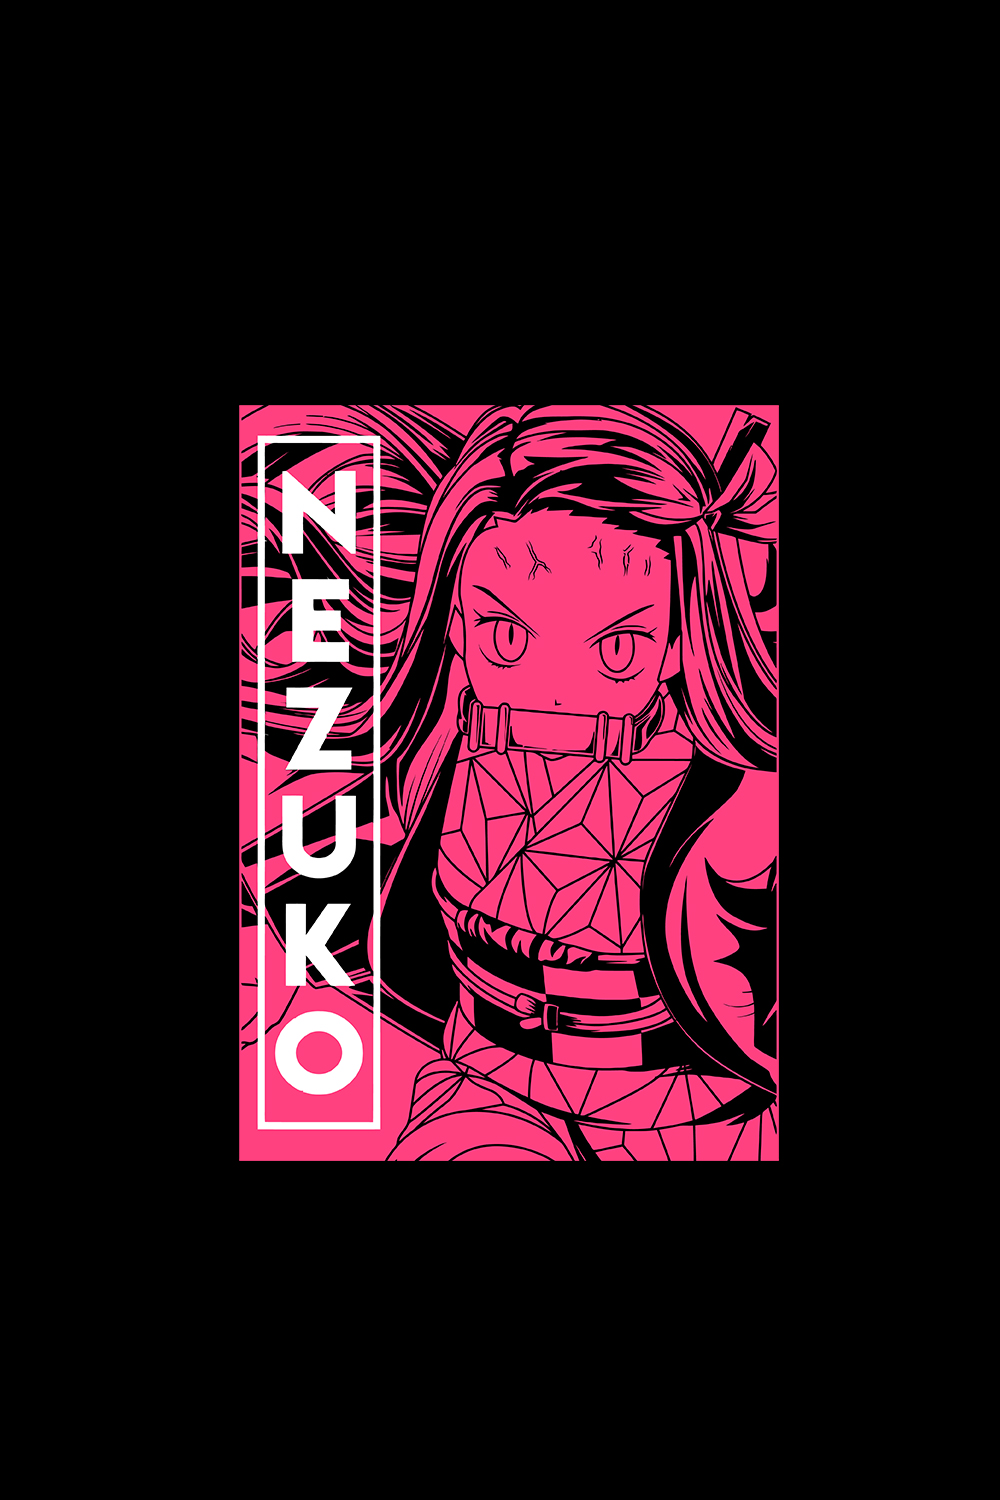 A Demon Slayer Nezuko T-shirt design pinterest preview image.